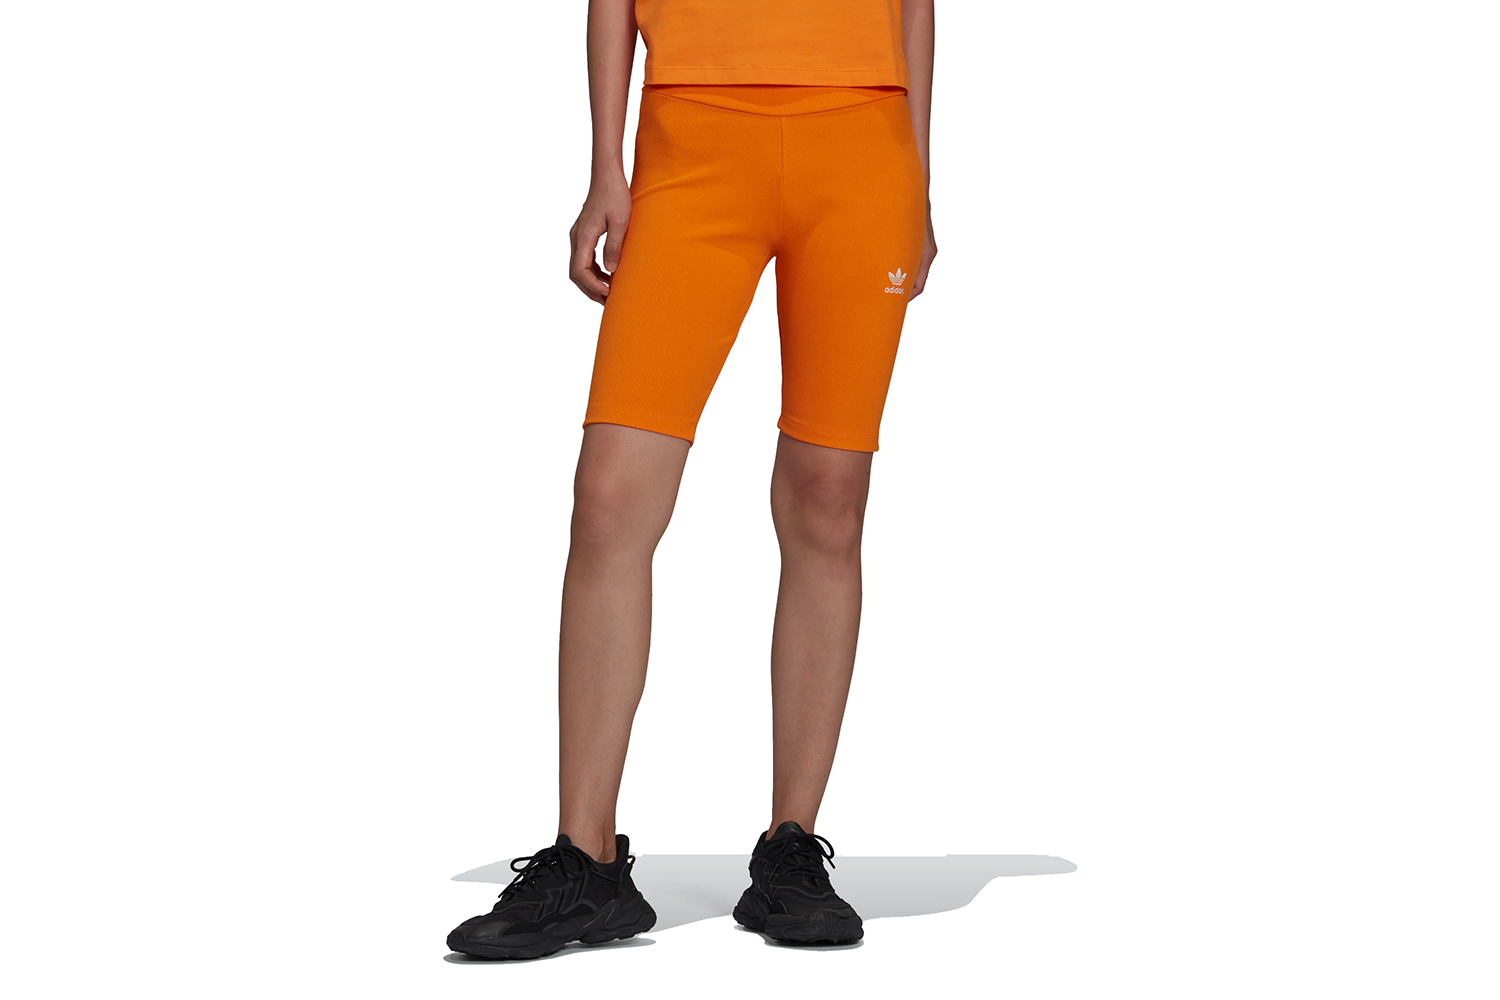 Sport Essential Full Length Mid Rise Leggings, Orange